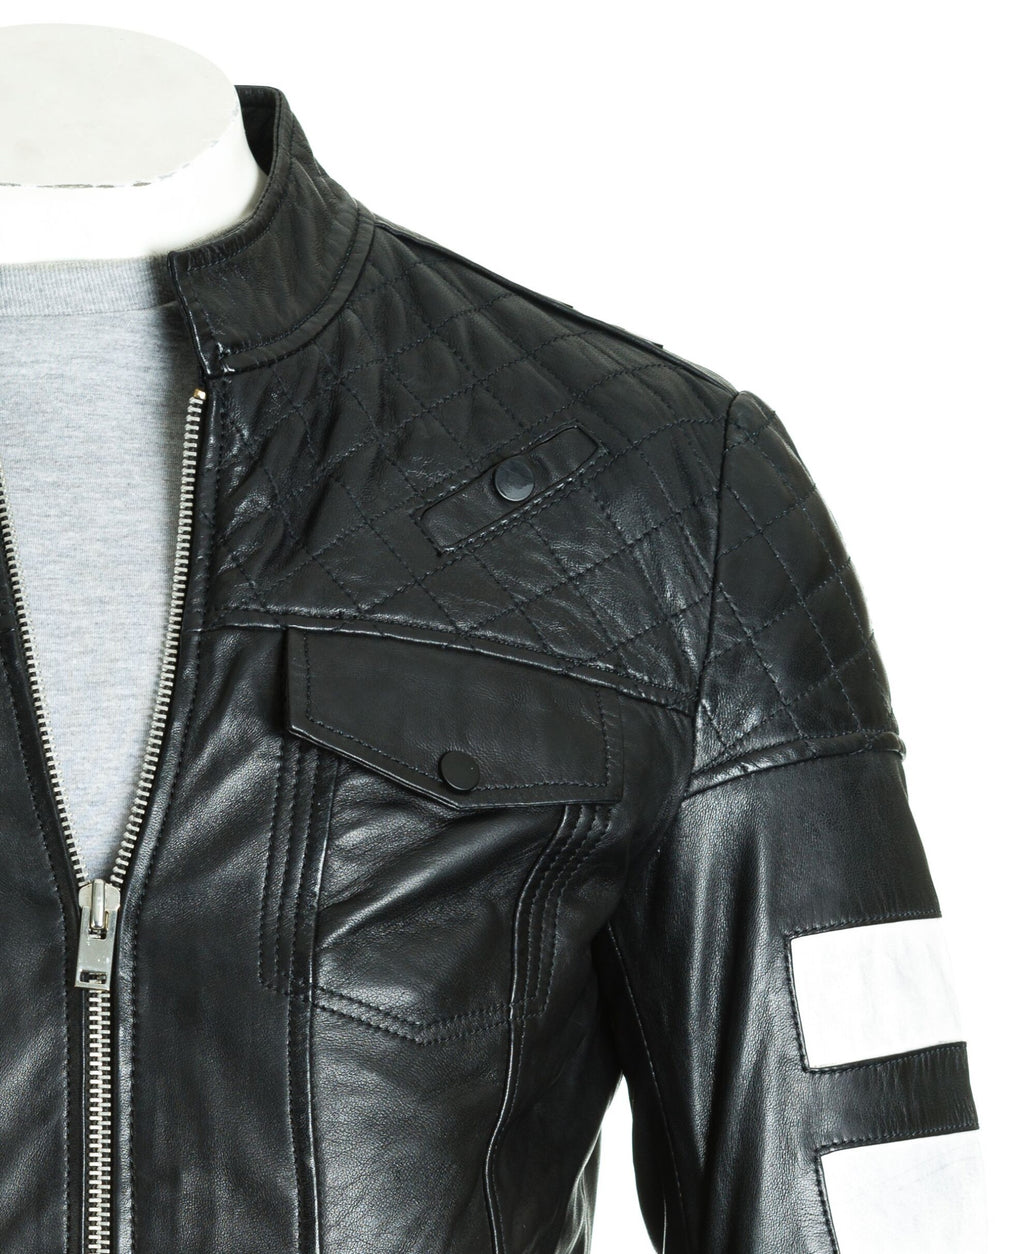 Men's Leather Biker Jacket with Contrast Stripe Detail: Manzu